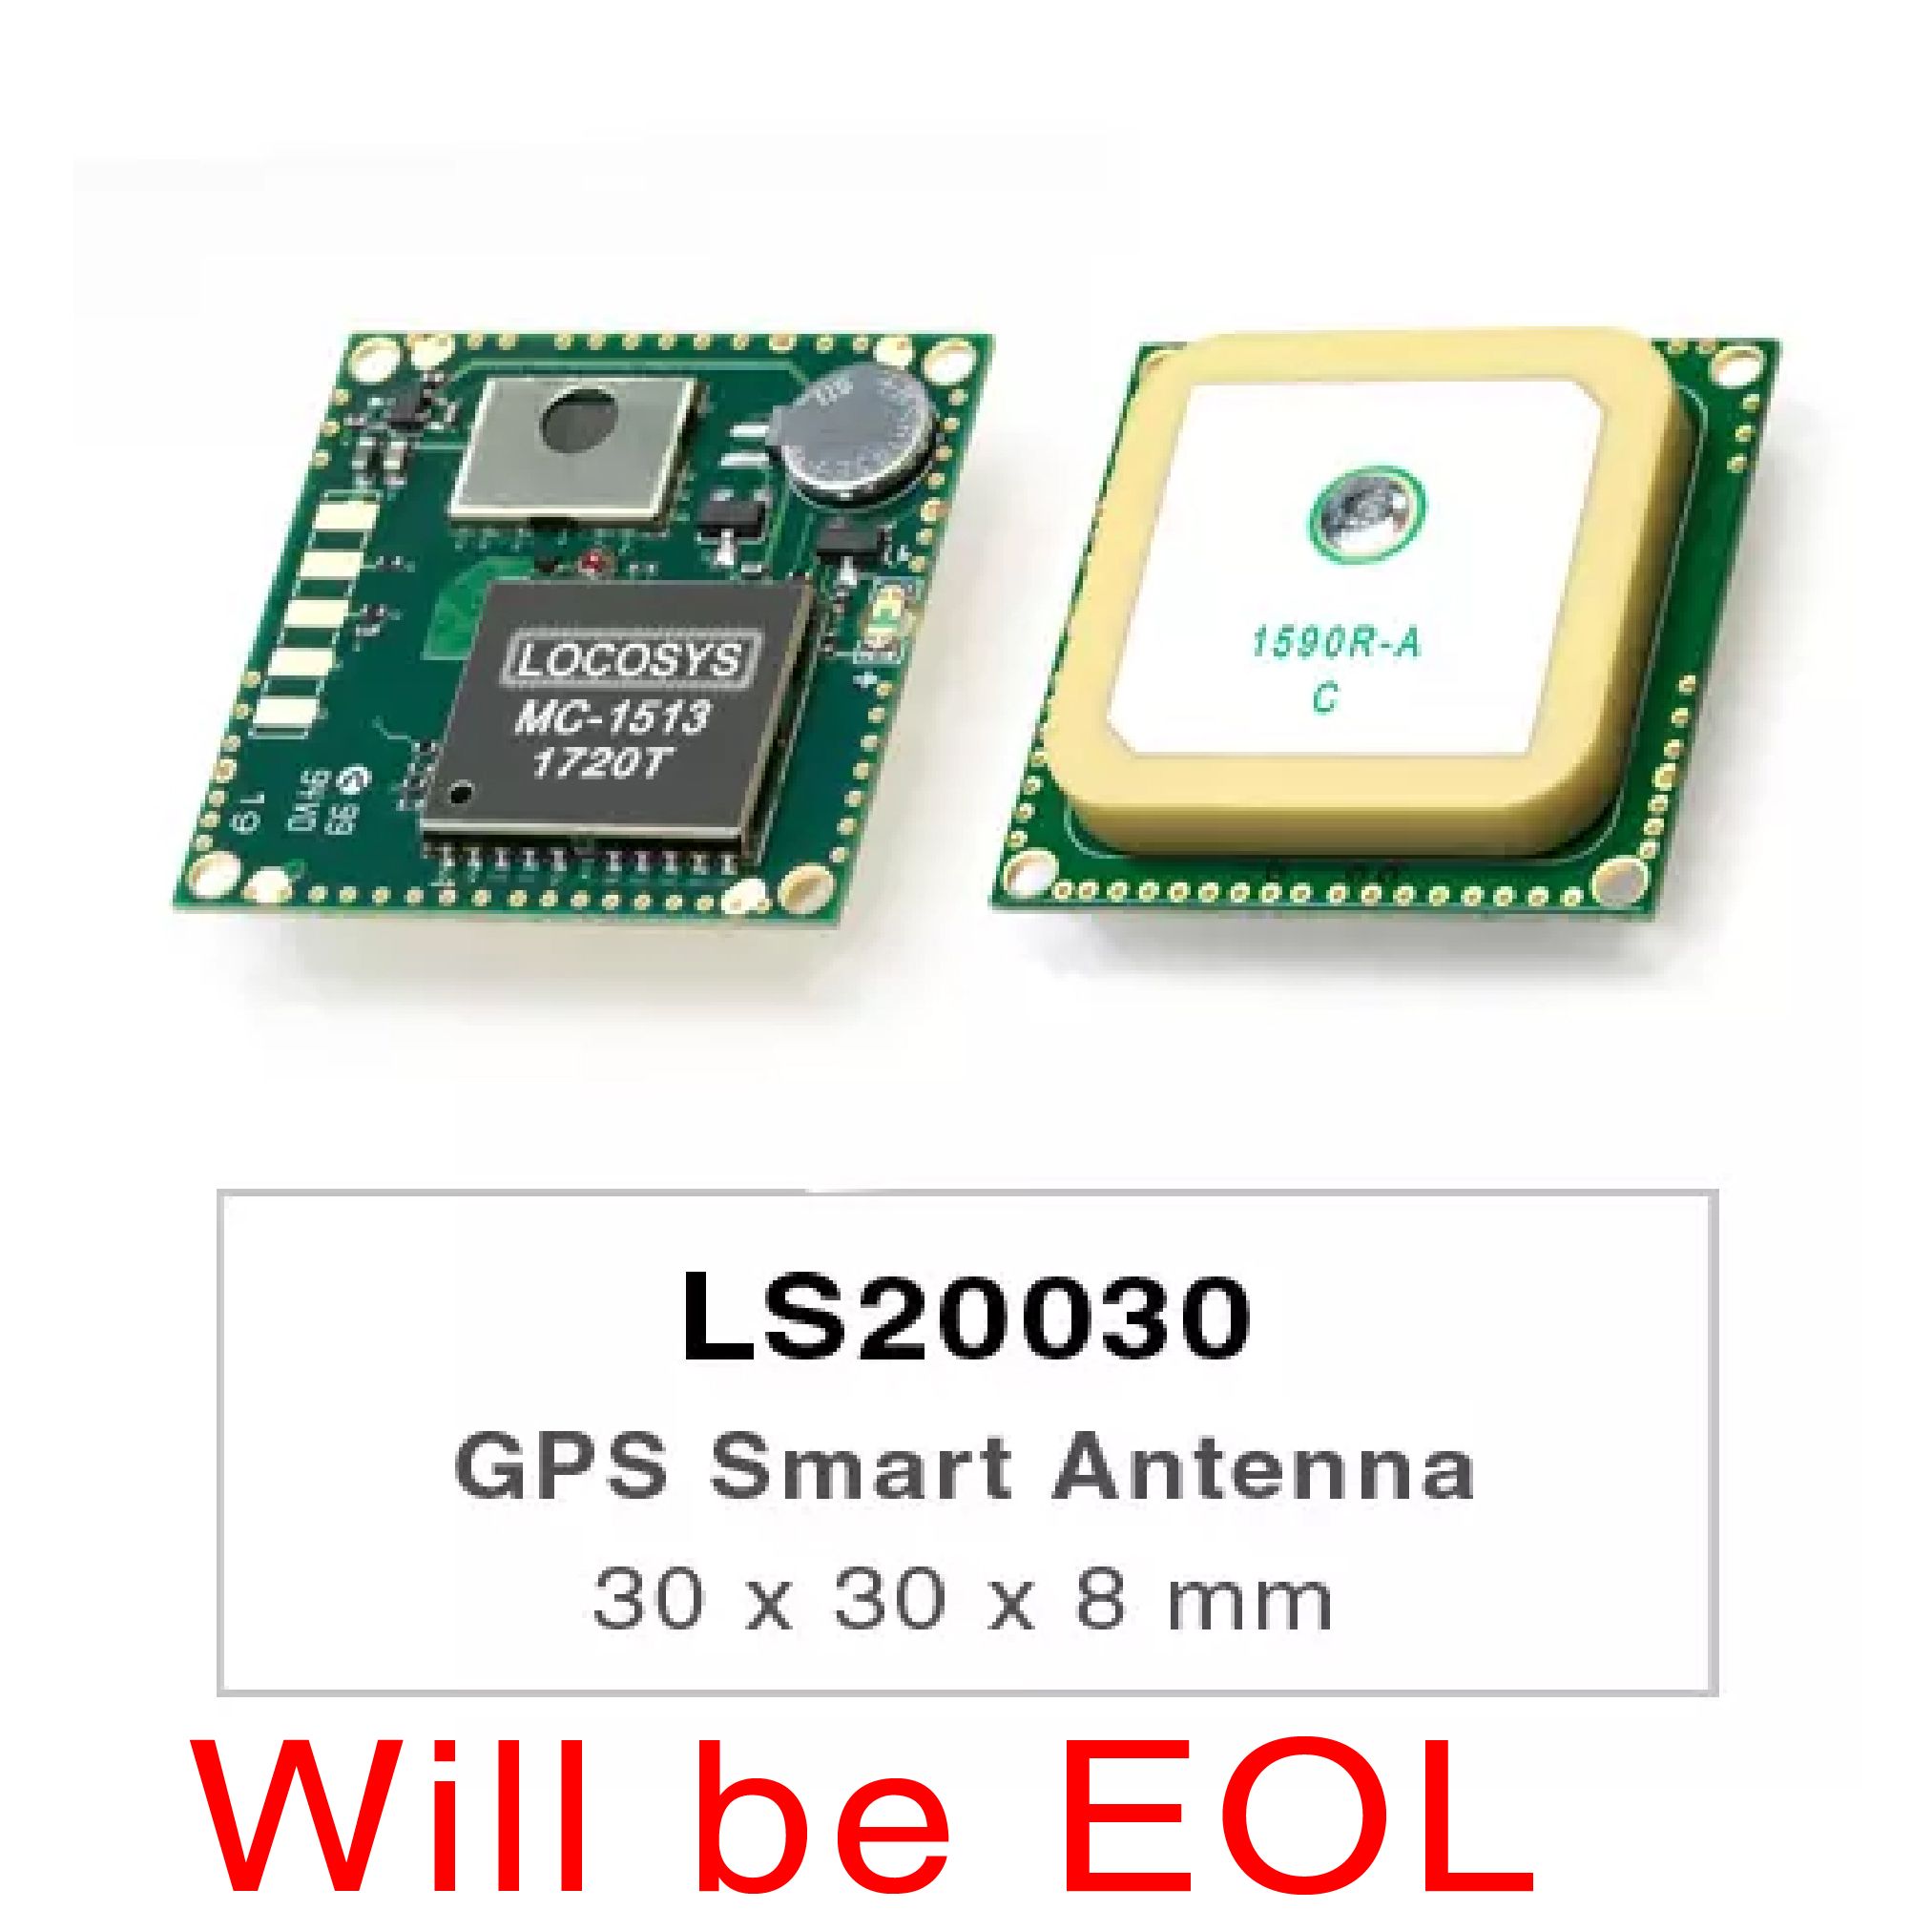 LS20030~2系列产品为GPS天线接收器，包括嵌入式天线和GPS接收电路，为OEM应用设计。